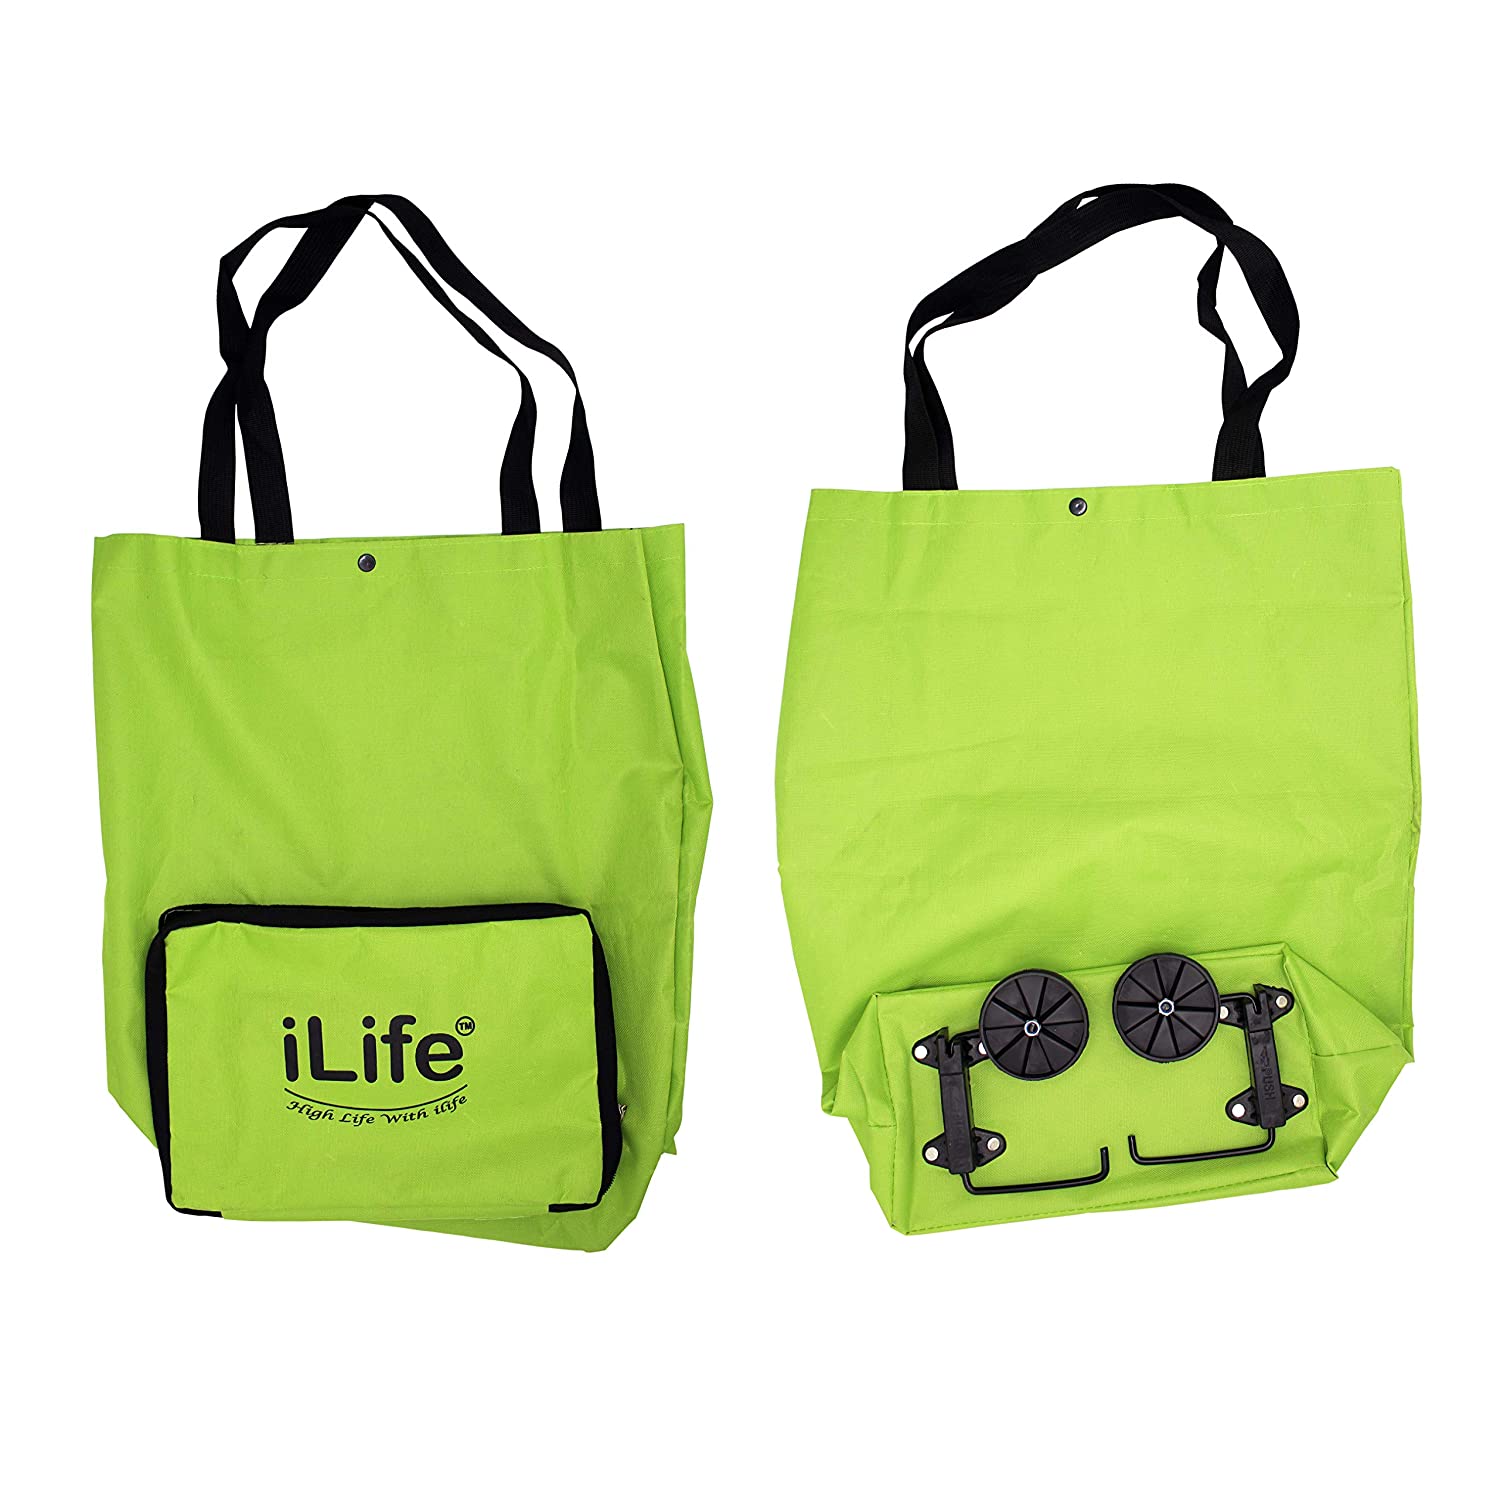 shopping bag; trolley bag; bag with wheels